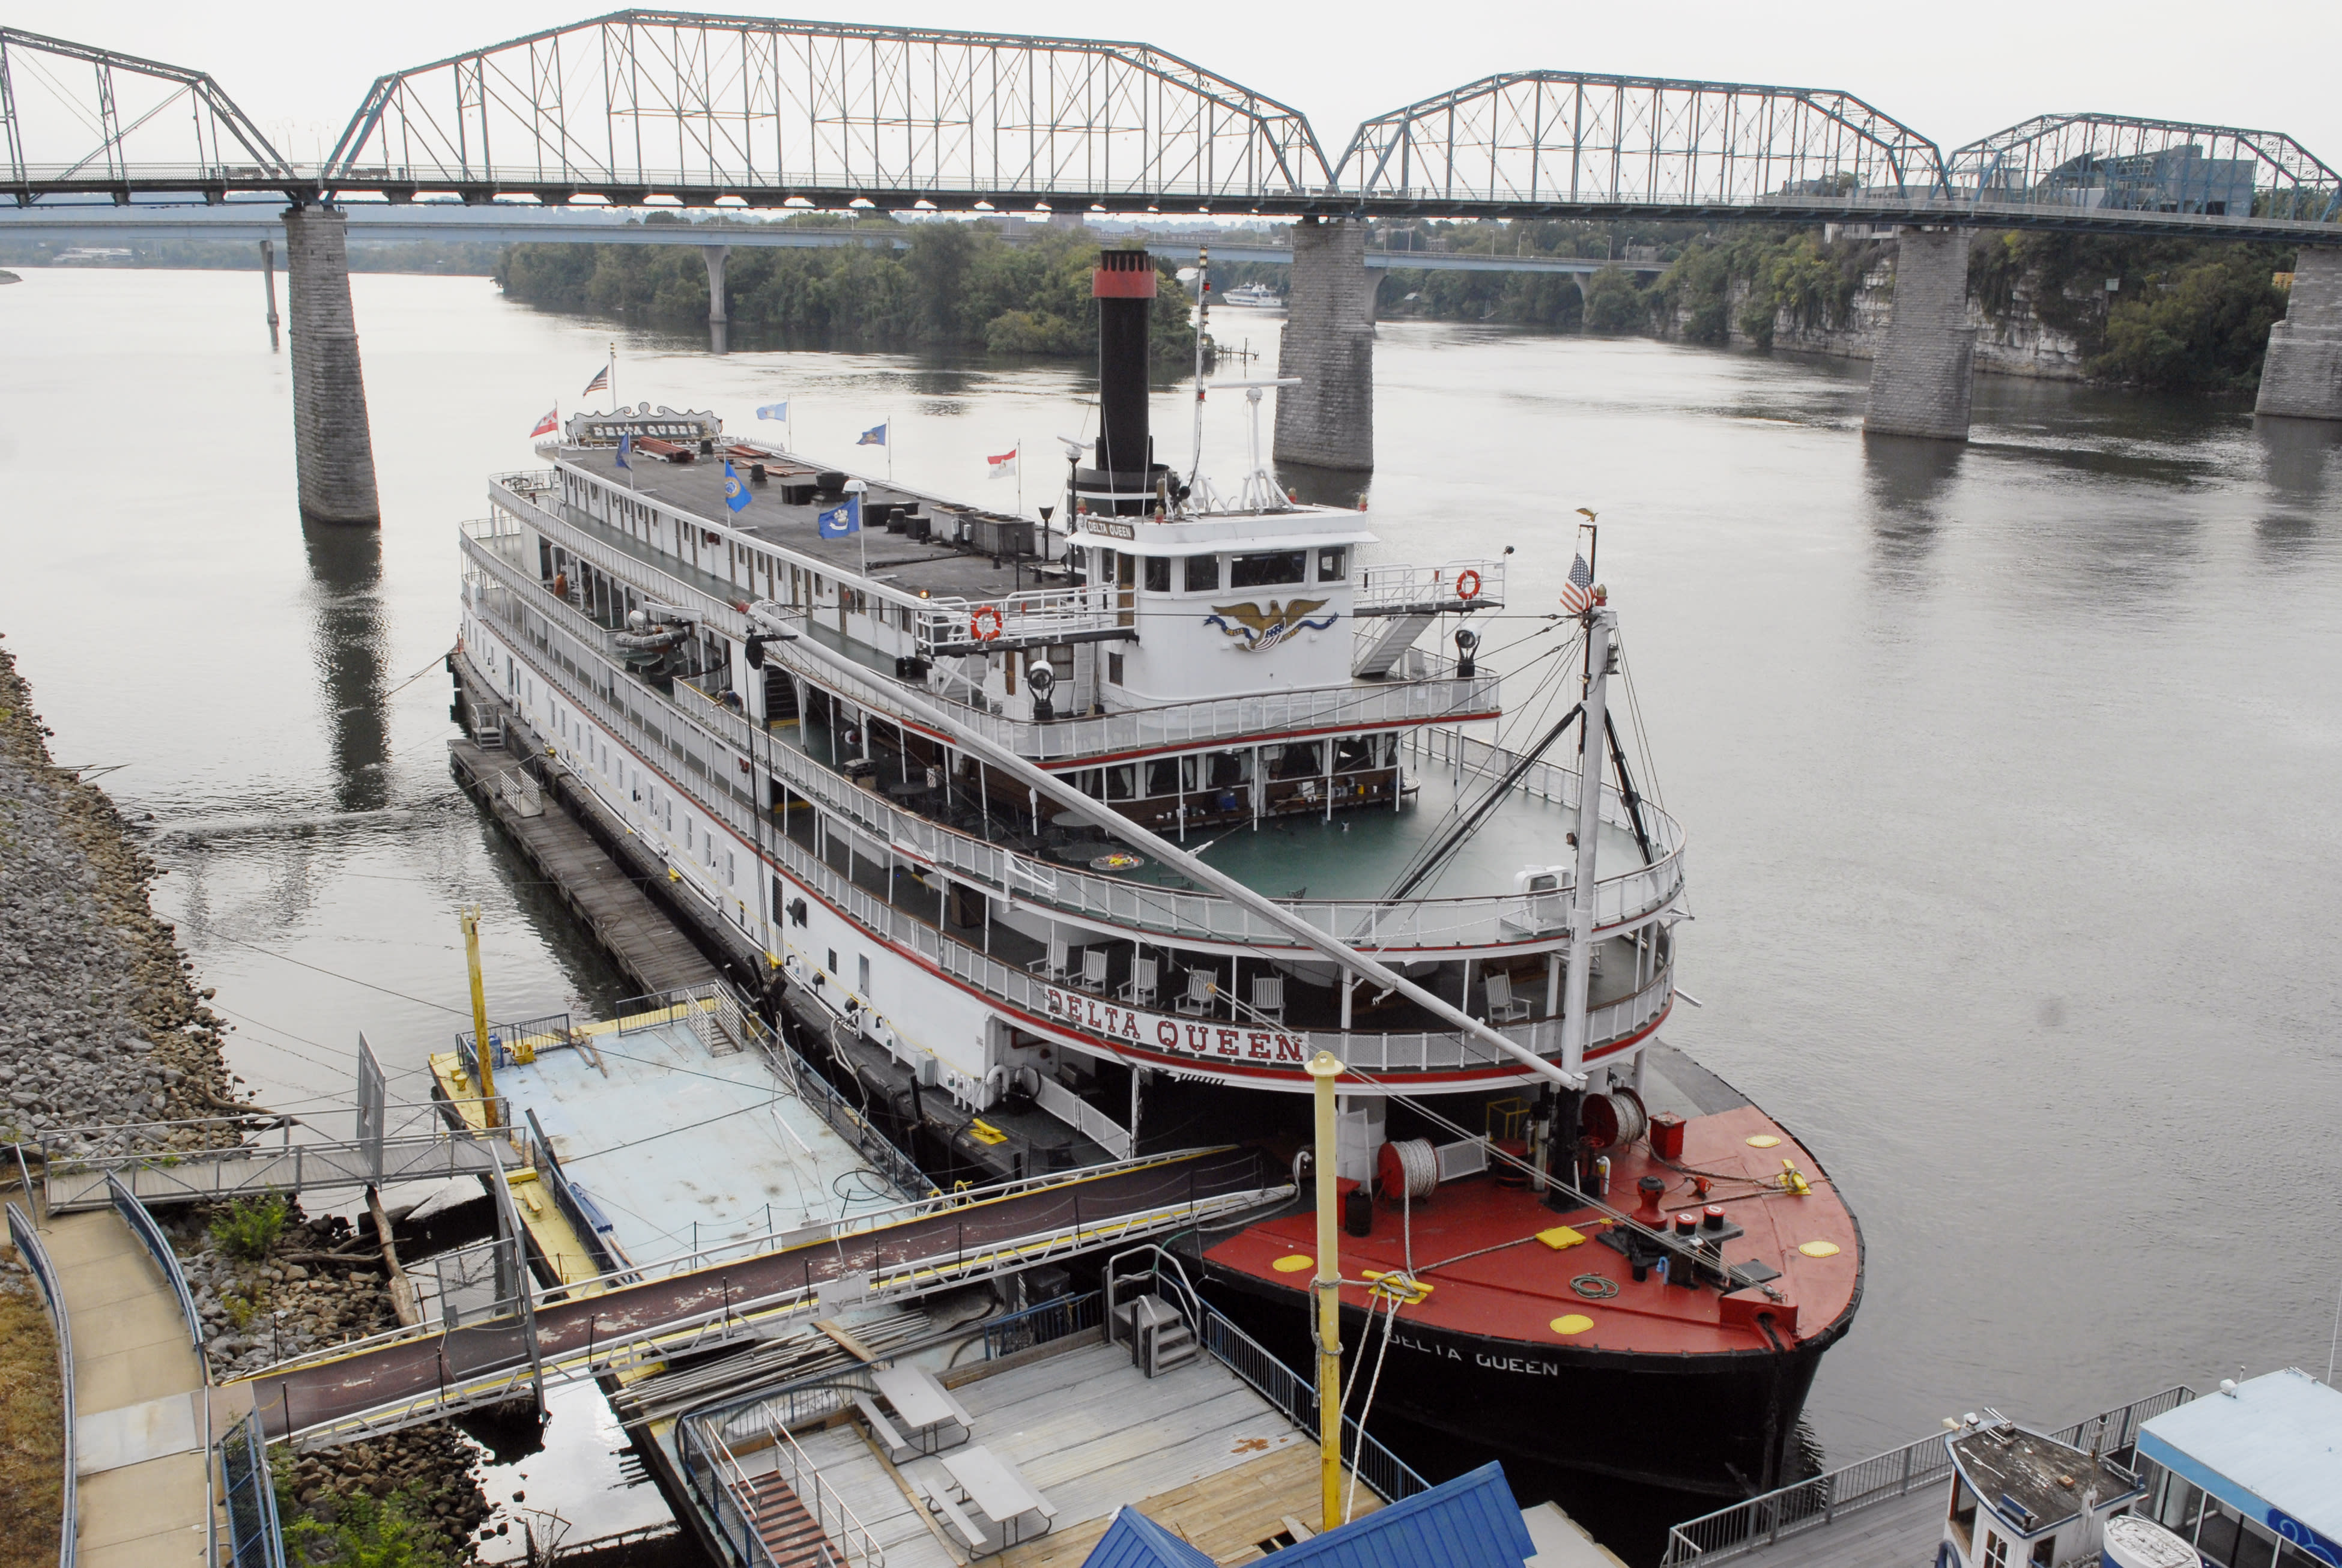 delta queen riverboat cruises